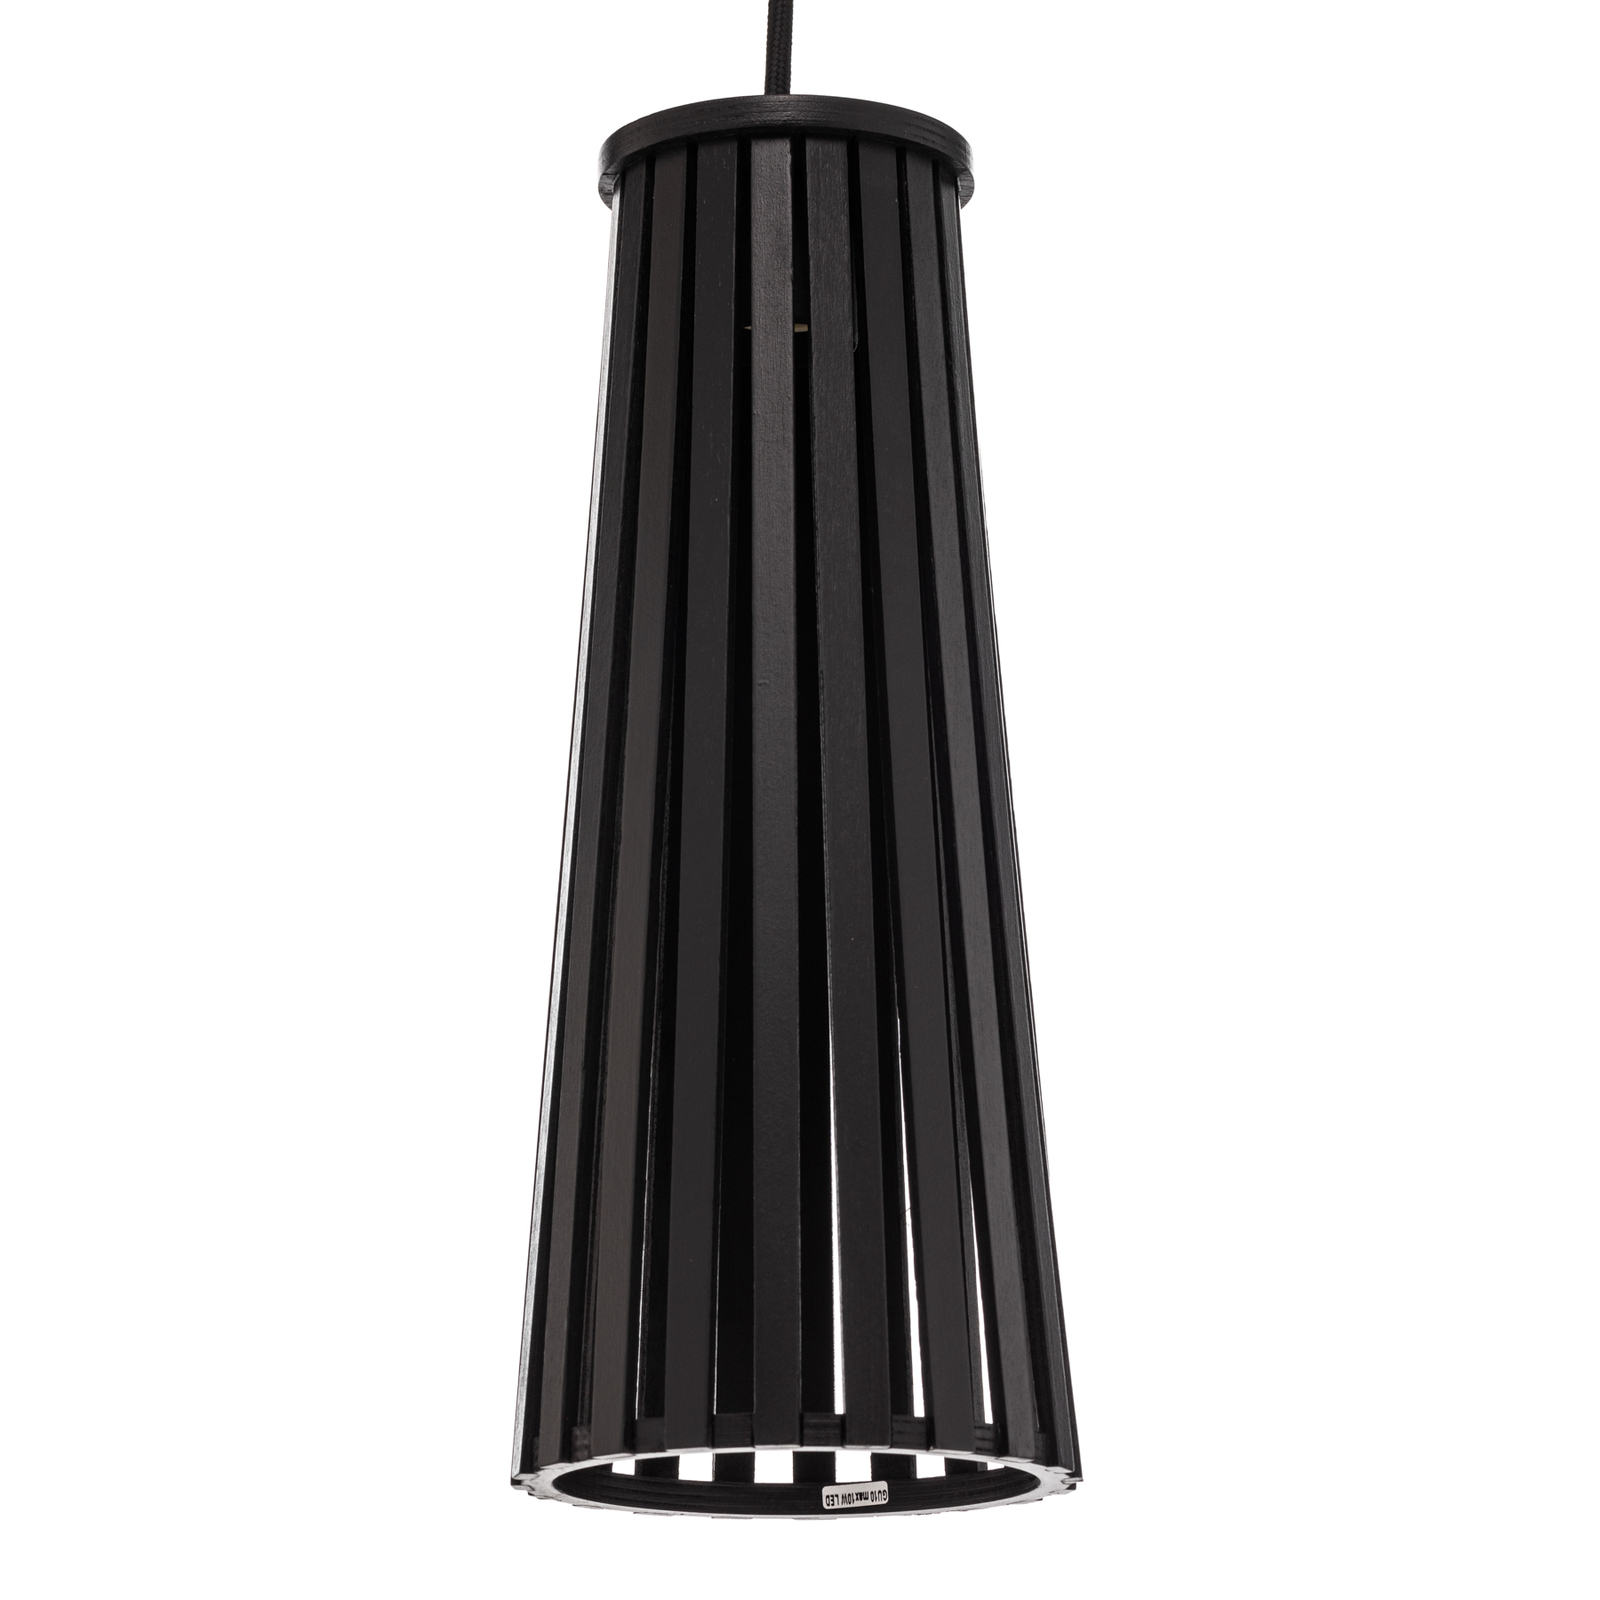 Wandlamp Dover met stekker, zwart, 1-lamp